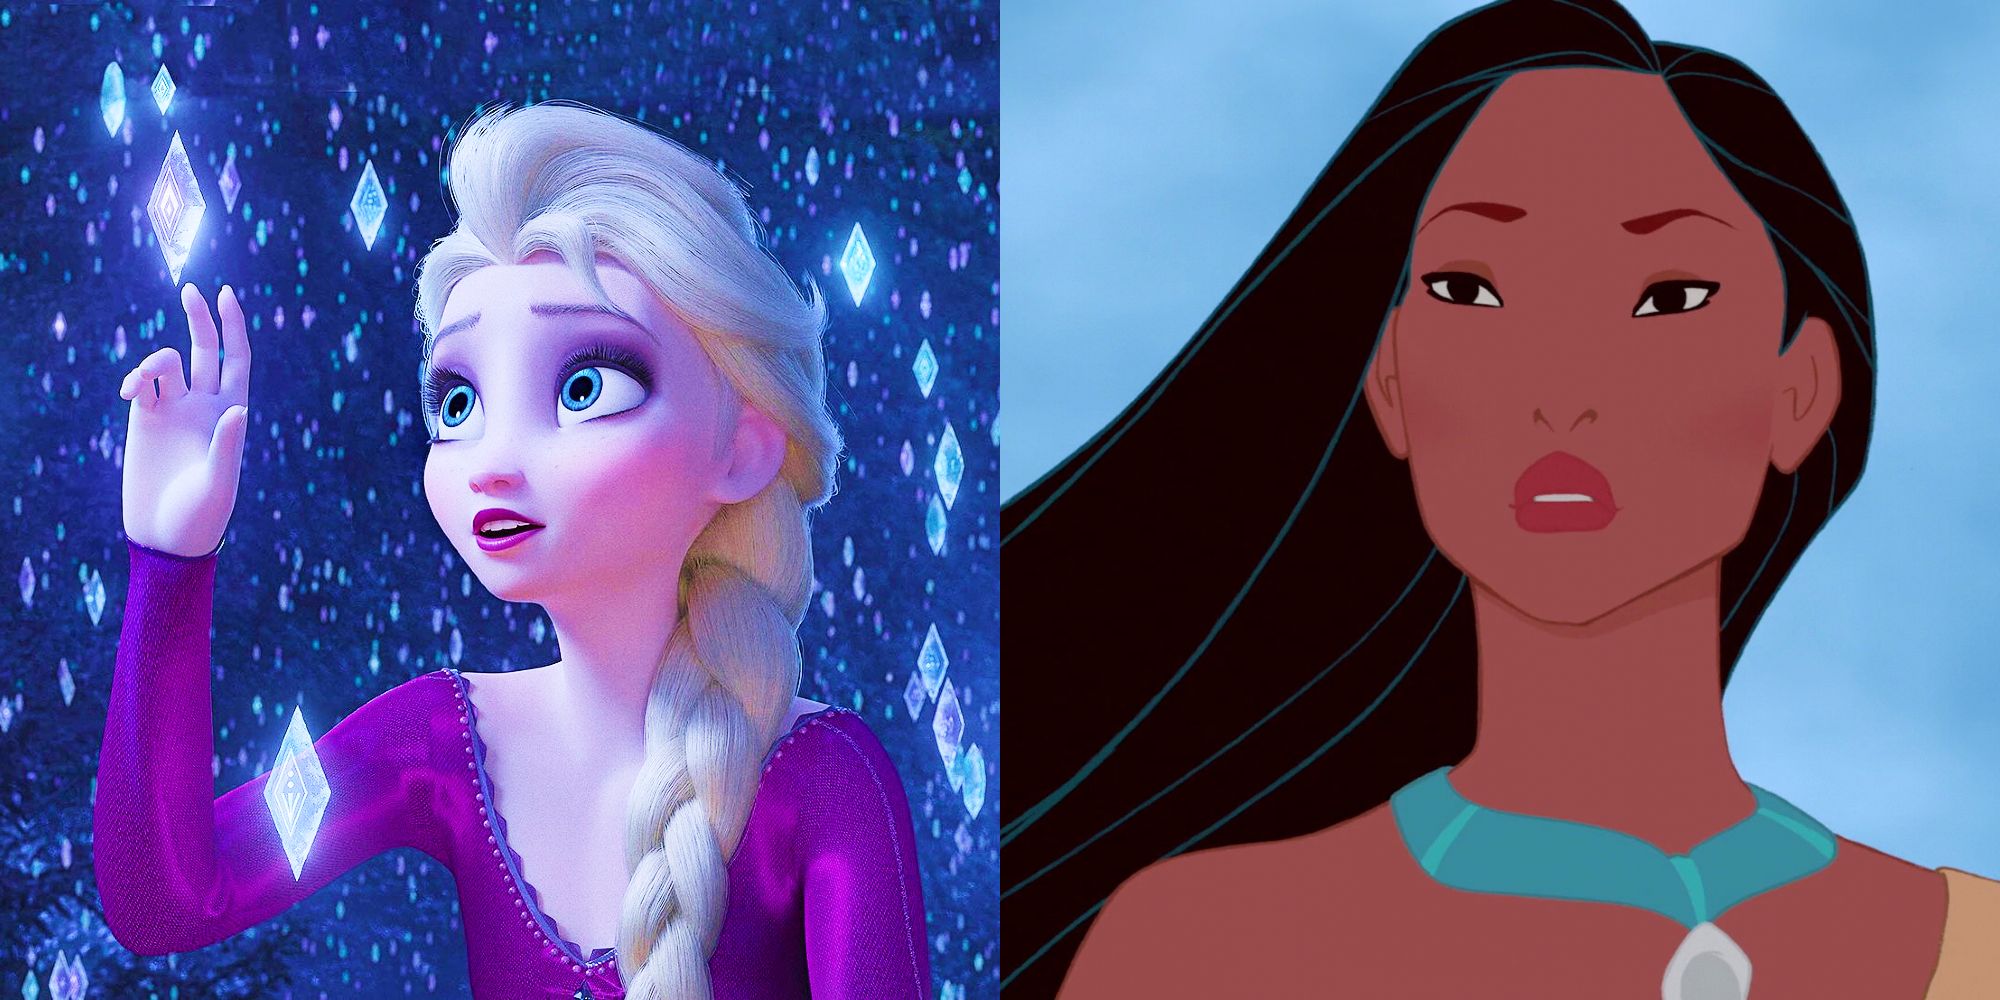 Split image: Elsa touching some sparkly thing, Pocahontas looking stoic